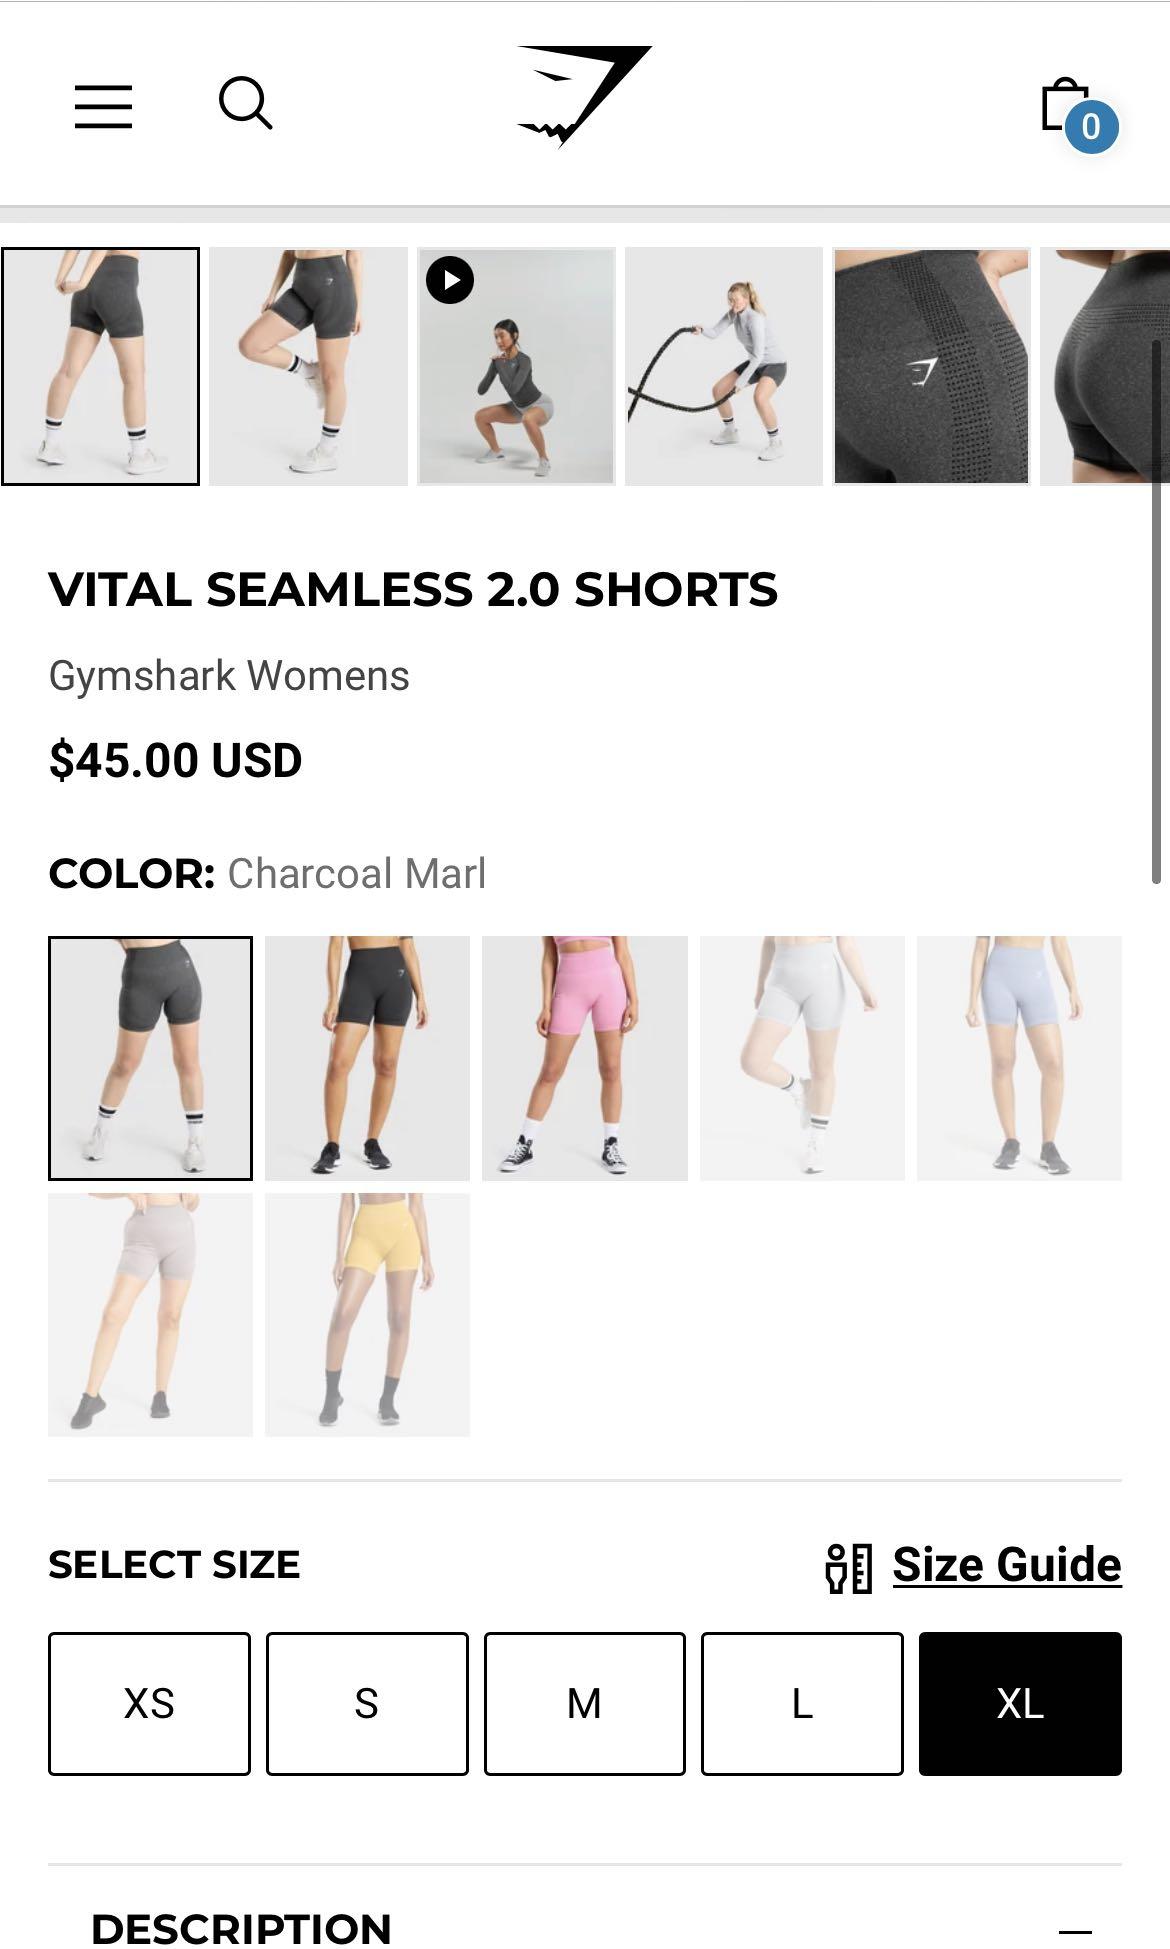 Gymshark Vital Seamless 2.0 Shorts Charcoal Marl